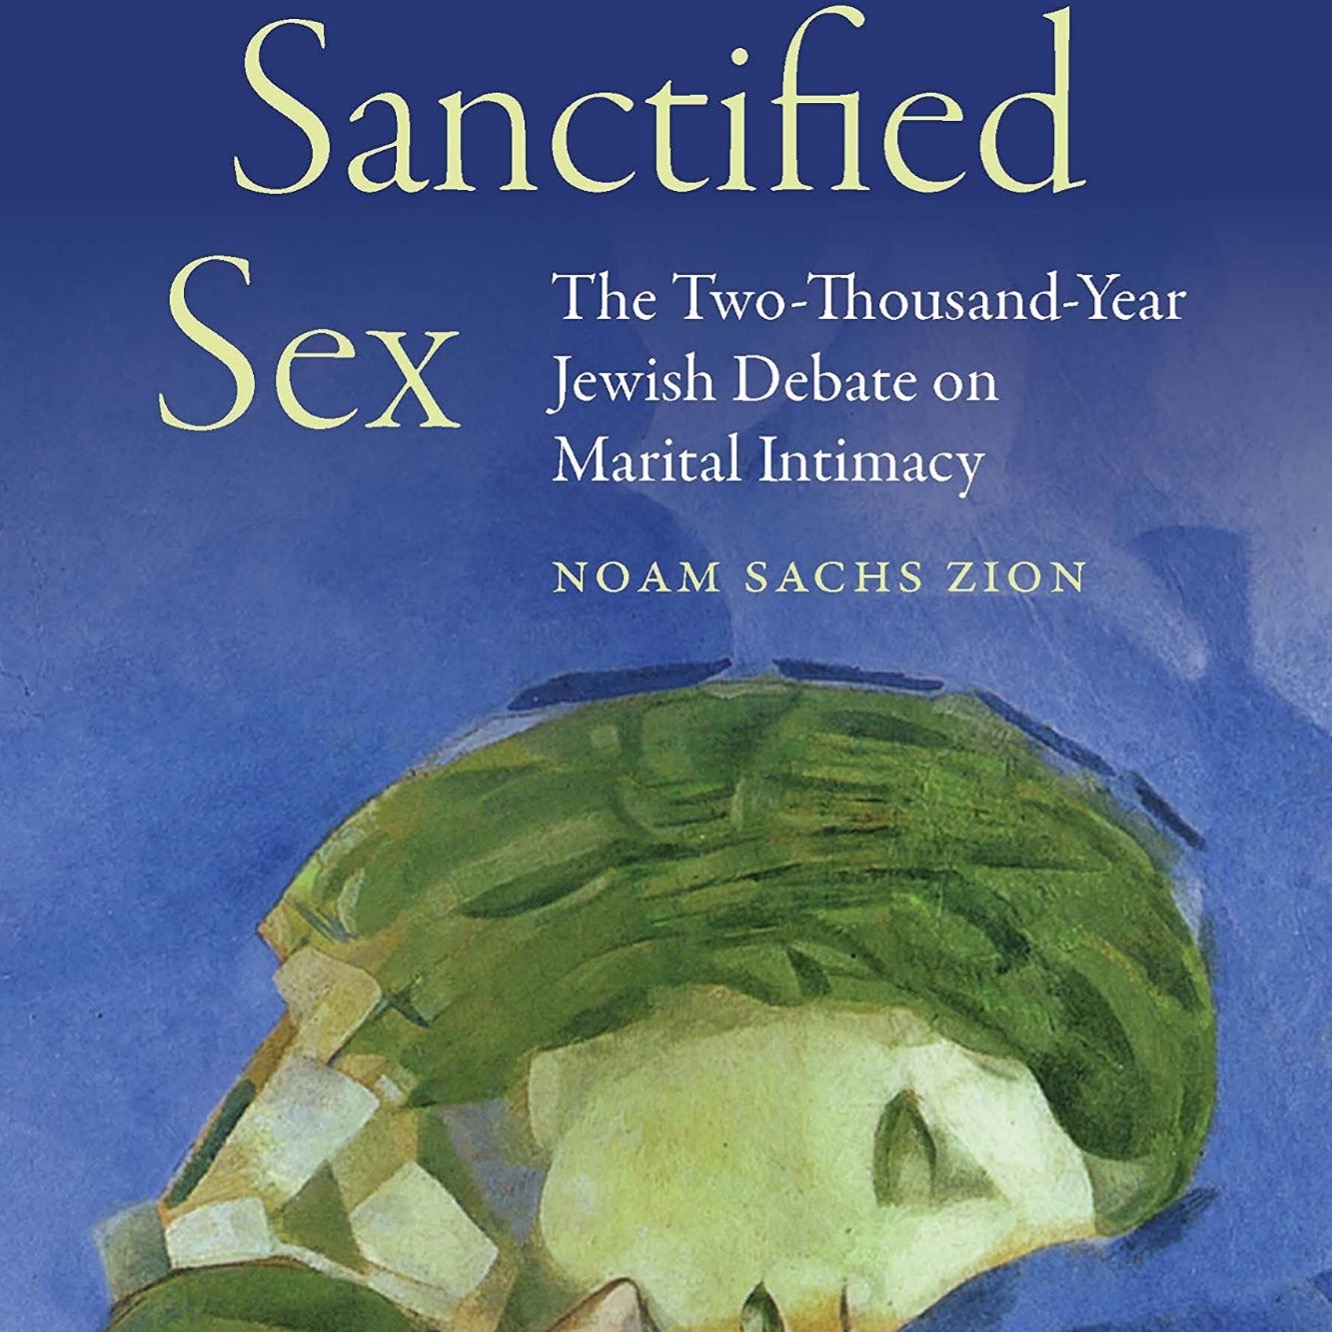 Monday: Sanctified Sex